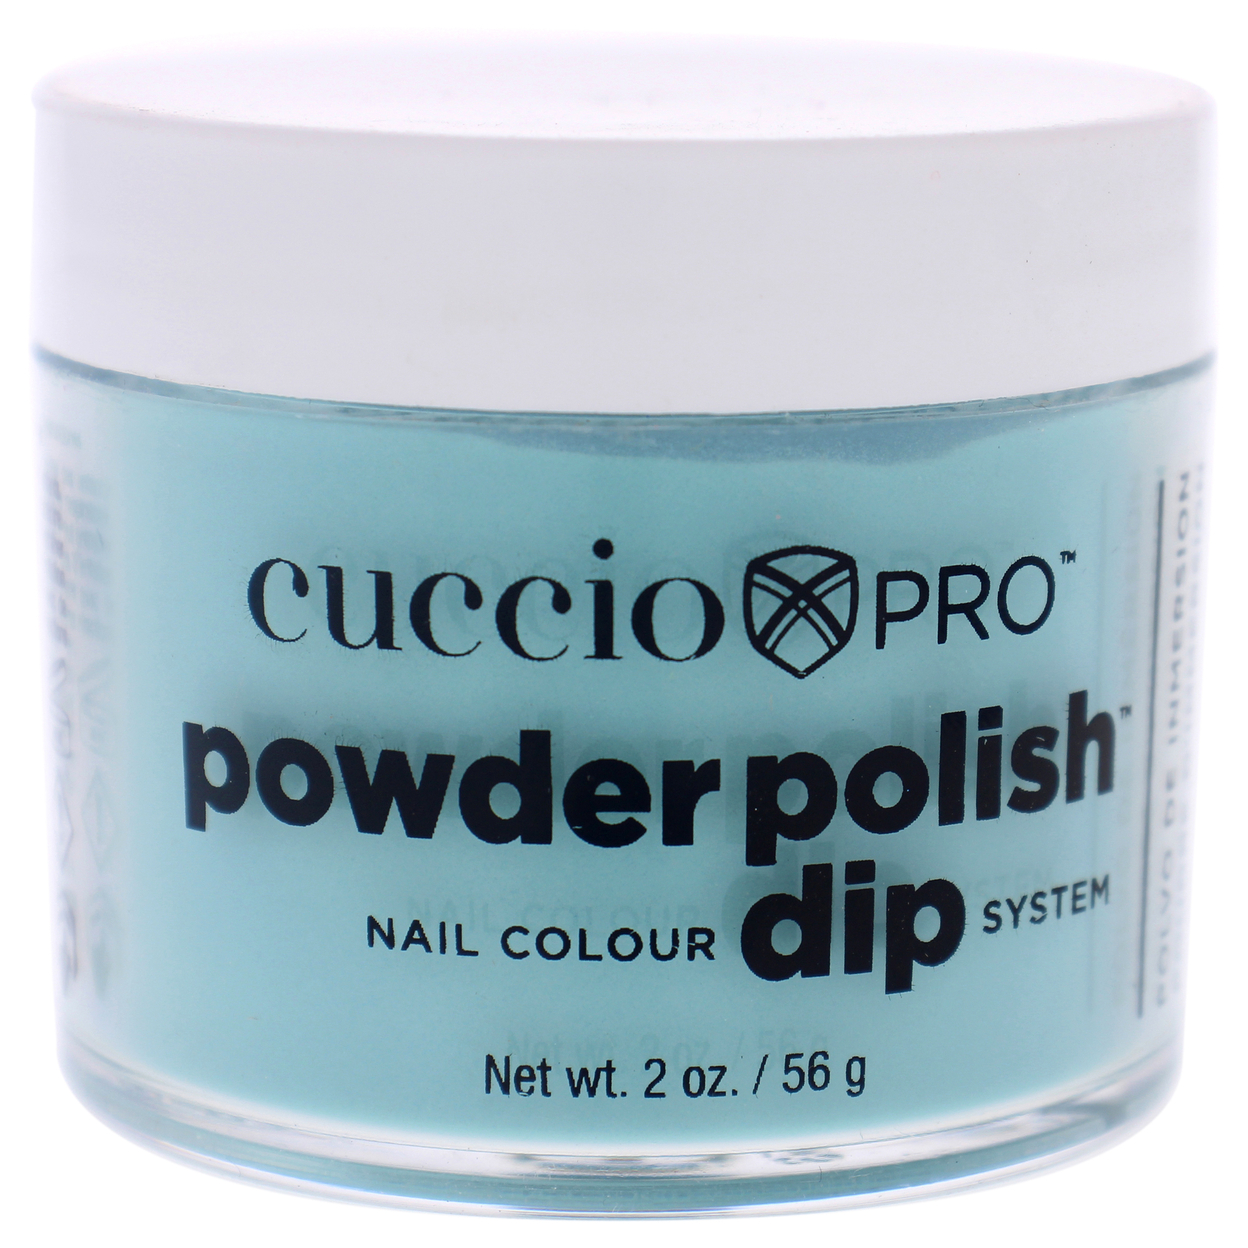 Cuccio Pro Pro Powder Polish Nail Colour Dip System - Aquaholic Nail Powder 1.6 Oz